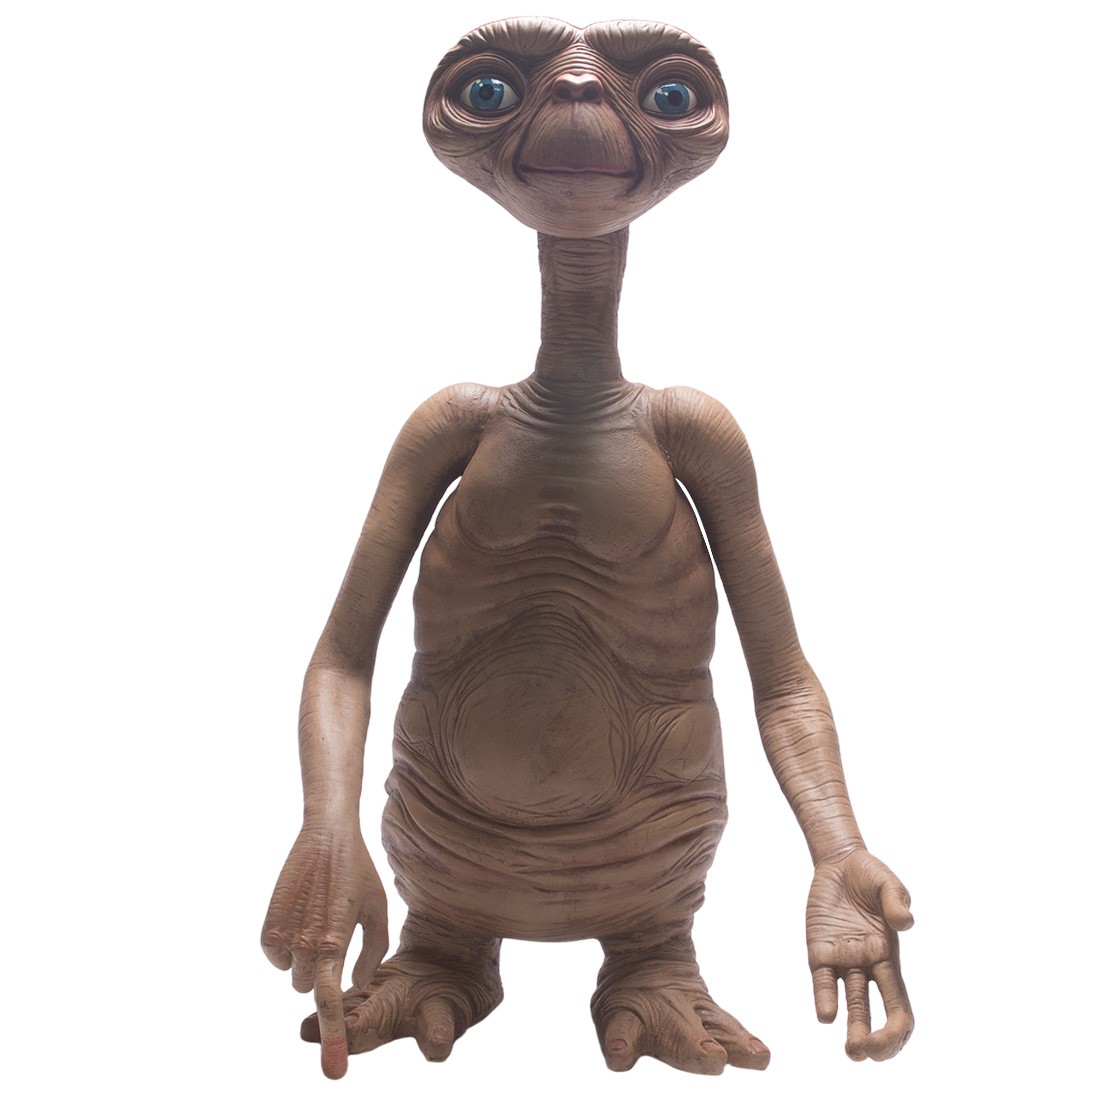 NECA E.T. The Extra Terrestrial Stunt Puppet Prop Replica Figure (brown)